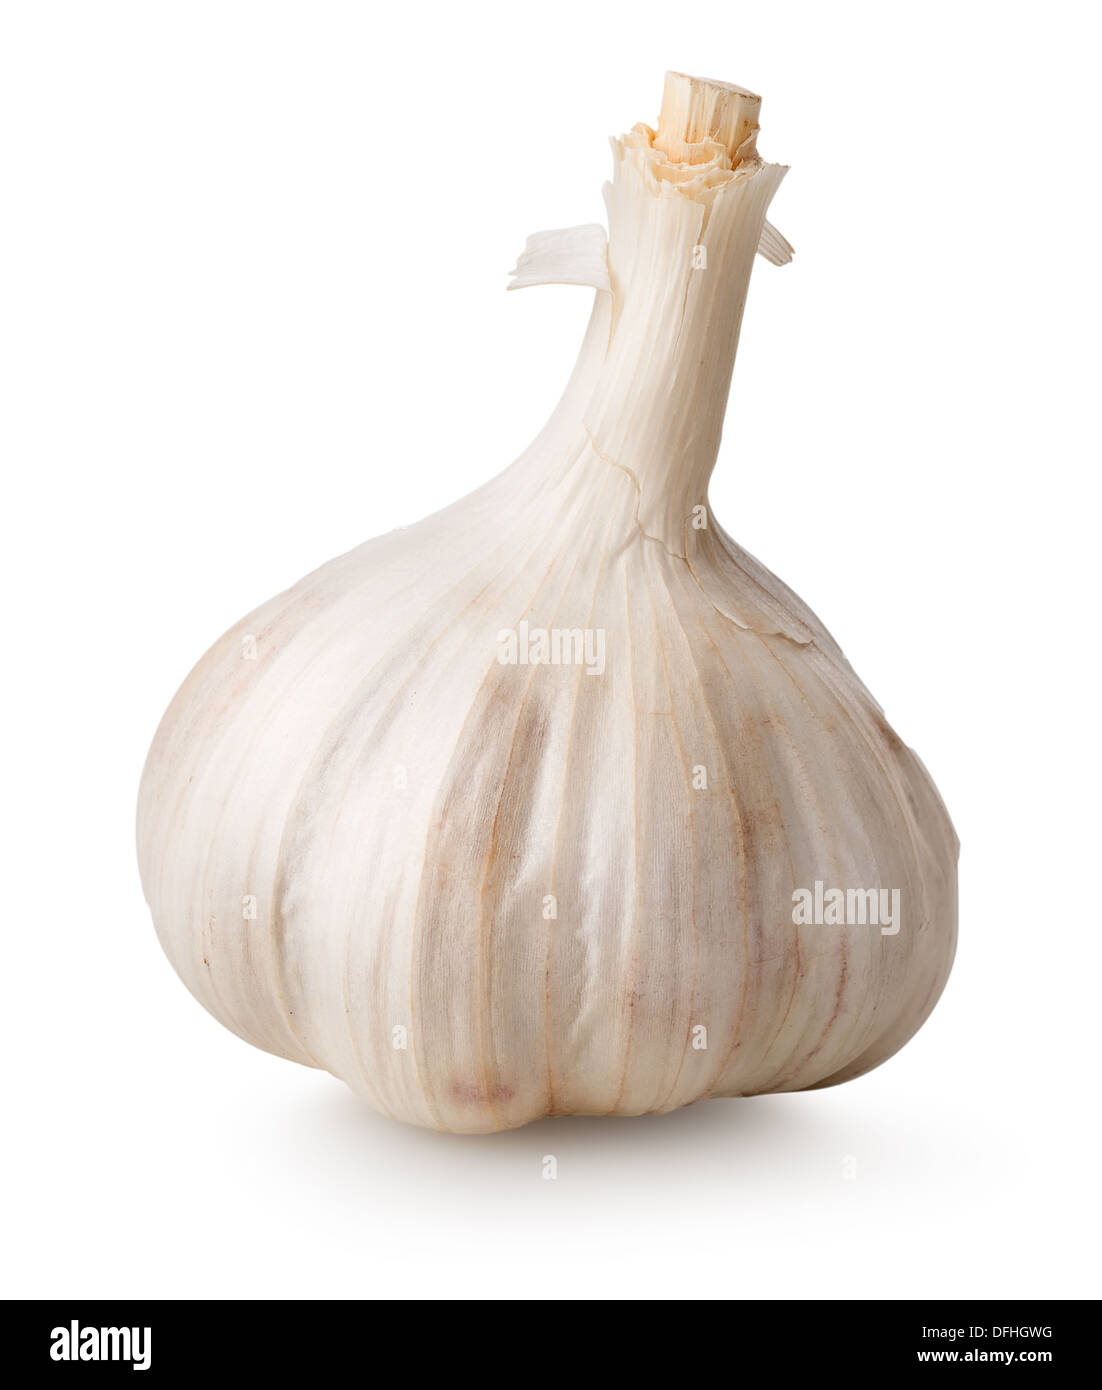 White garlic isolated on a white background Stock Photo